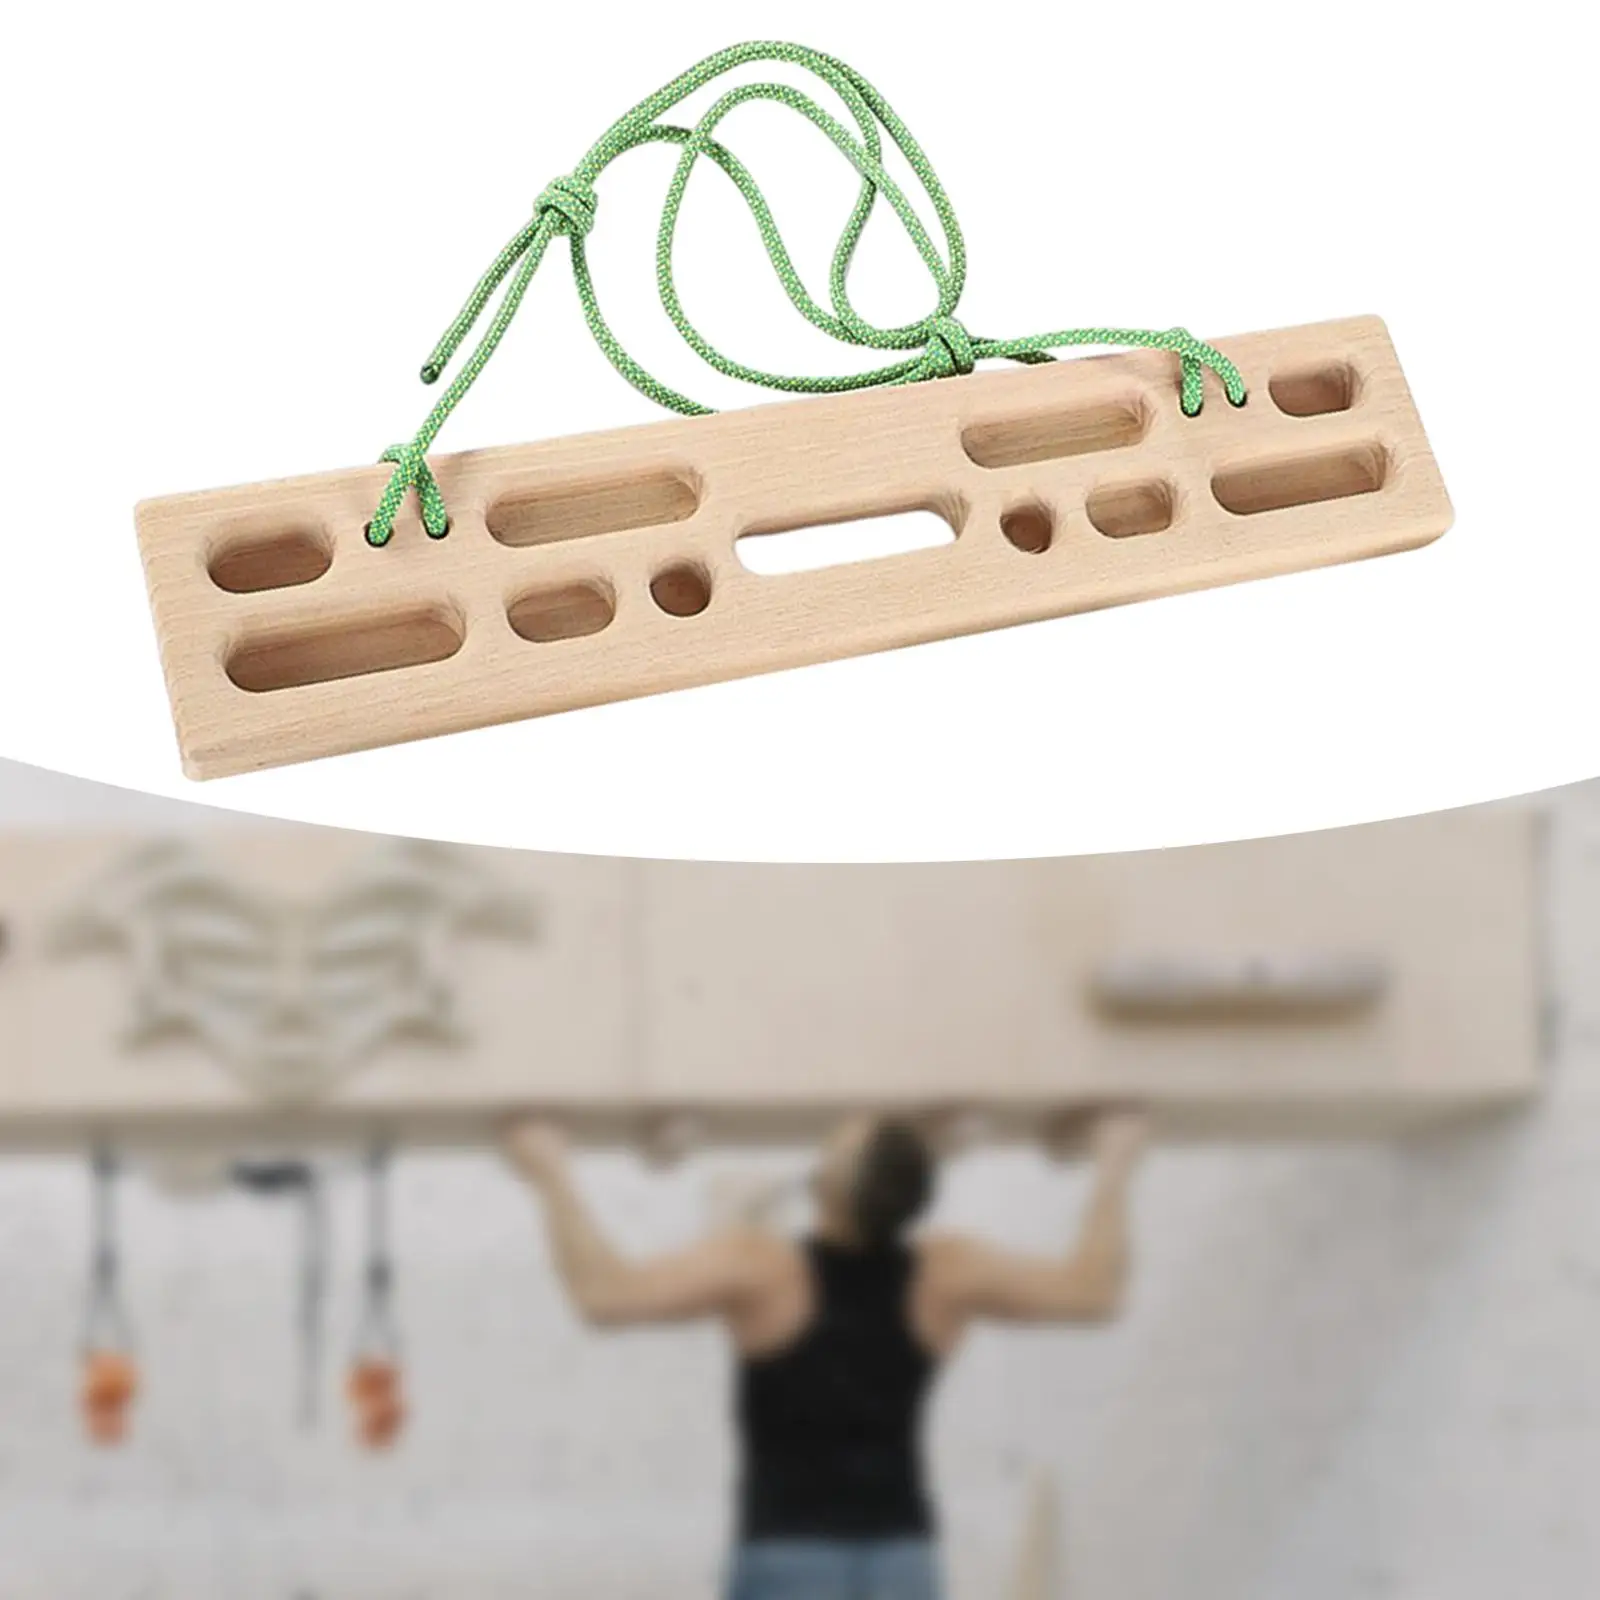 Climbing Hangboard Climbing Fingerboard Building Core Strength Wooden Hang Board for Athletes Wall Outdoor Bouldering Doorway